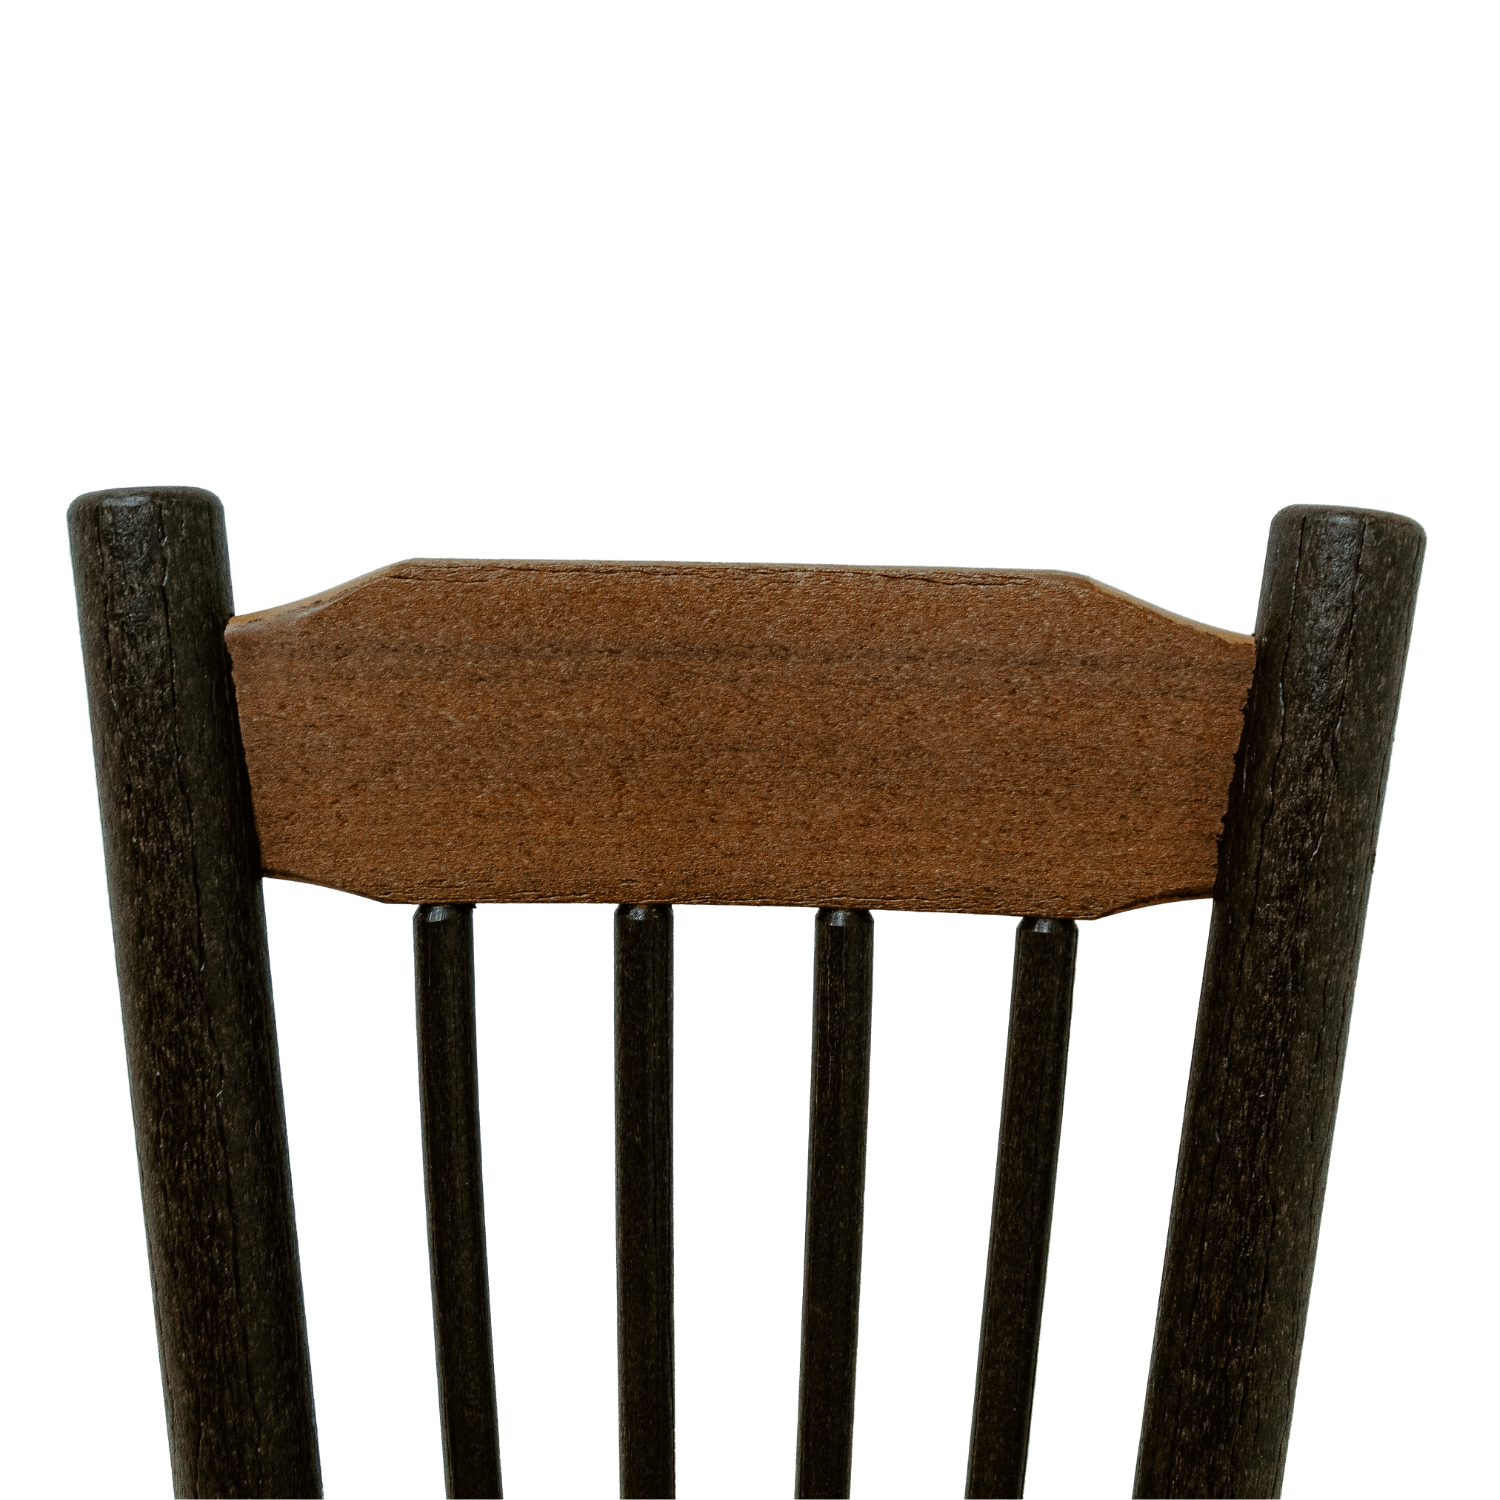 Poly Log Mahogany Dining Chair